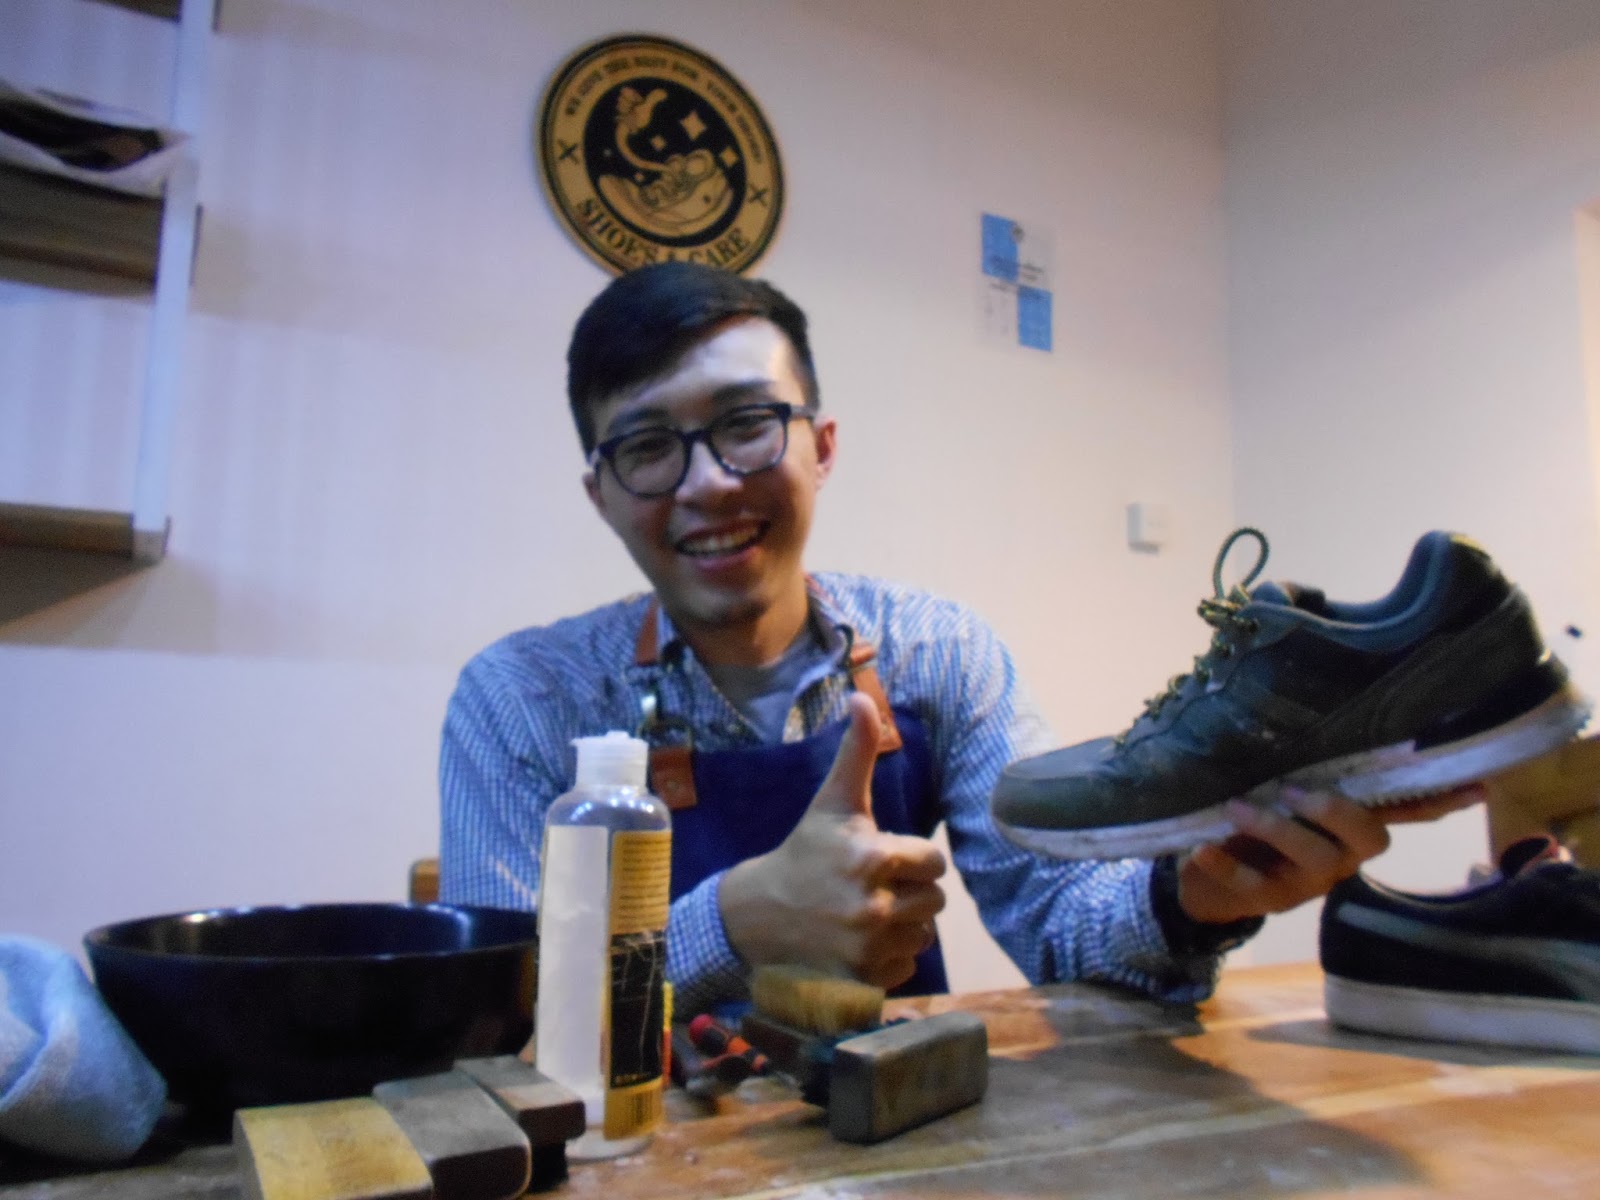 Kebersahajaan Tirta Mandira Hudhi Dokter Sekaligus Pebisnis Laundry Sepatu